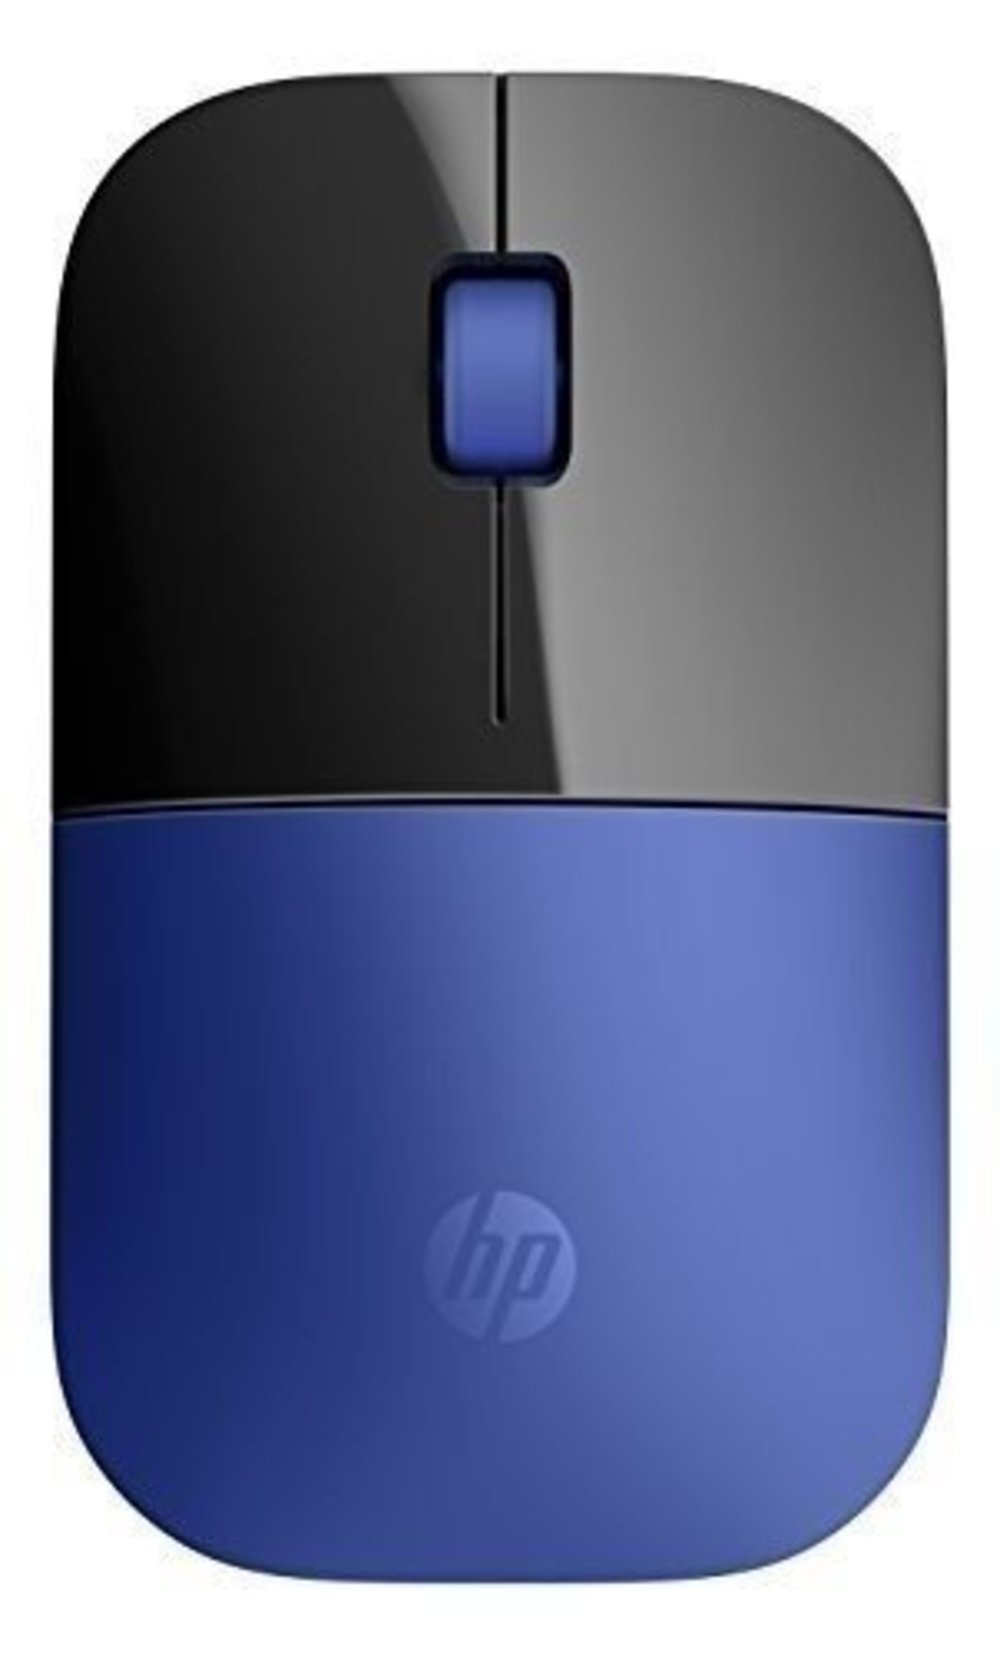  HP Z3700 Blue Wireless Maus